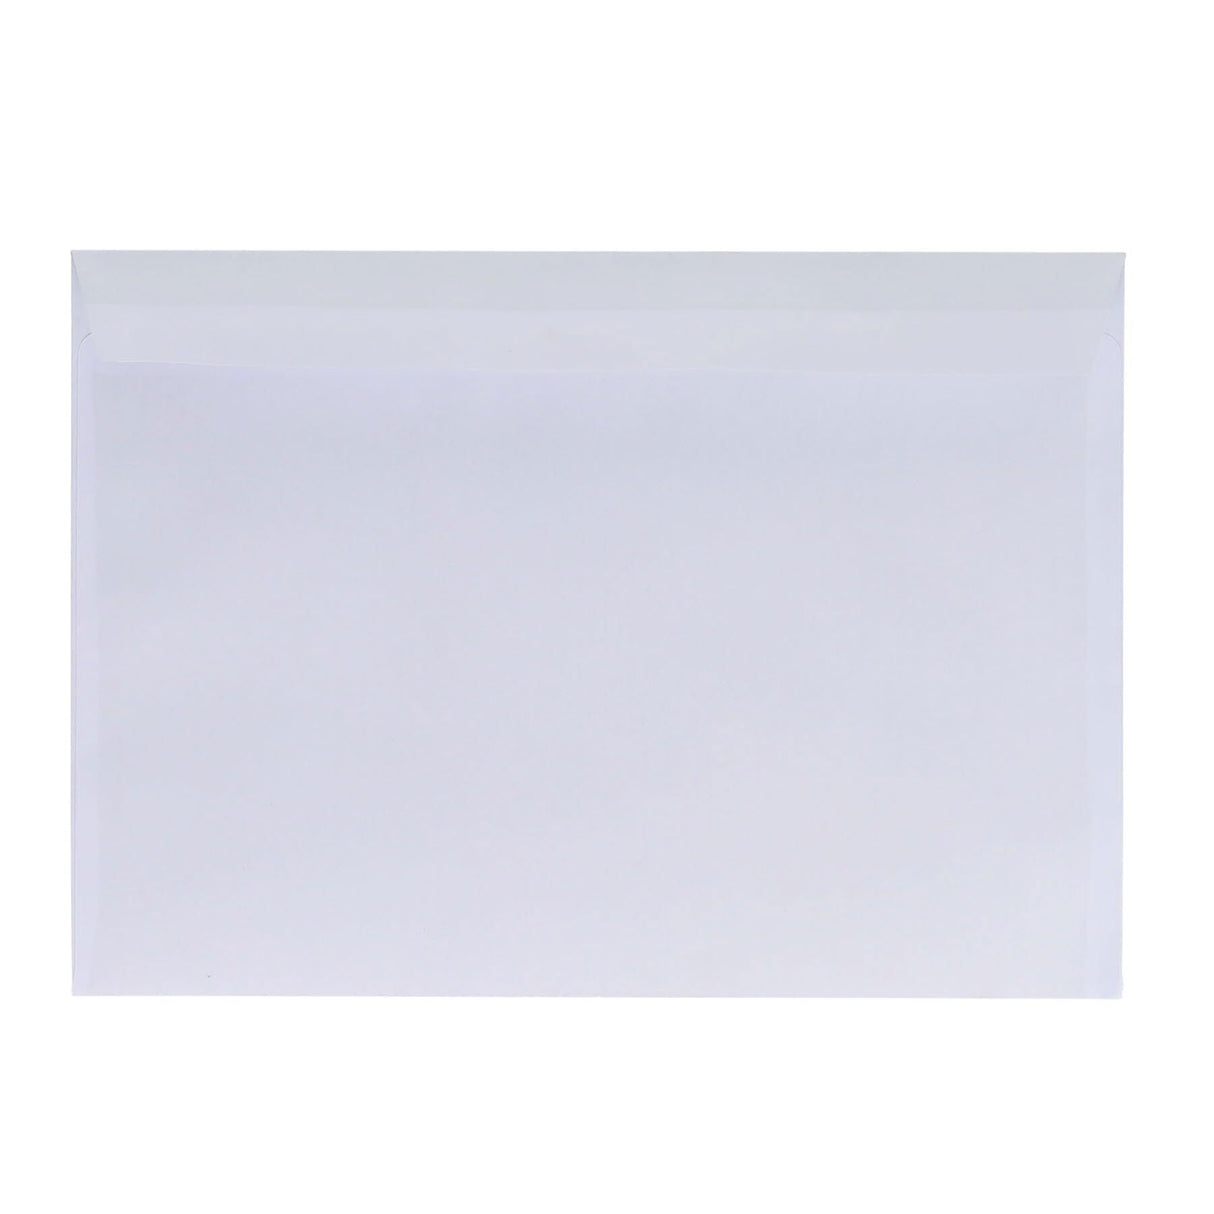 Premail C5 Peel & Seal Envelopes - 229 x 162mm - White - Pack of 25-Envelopes-Premail|StationeryShop.co.uk